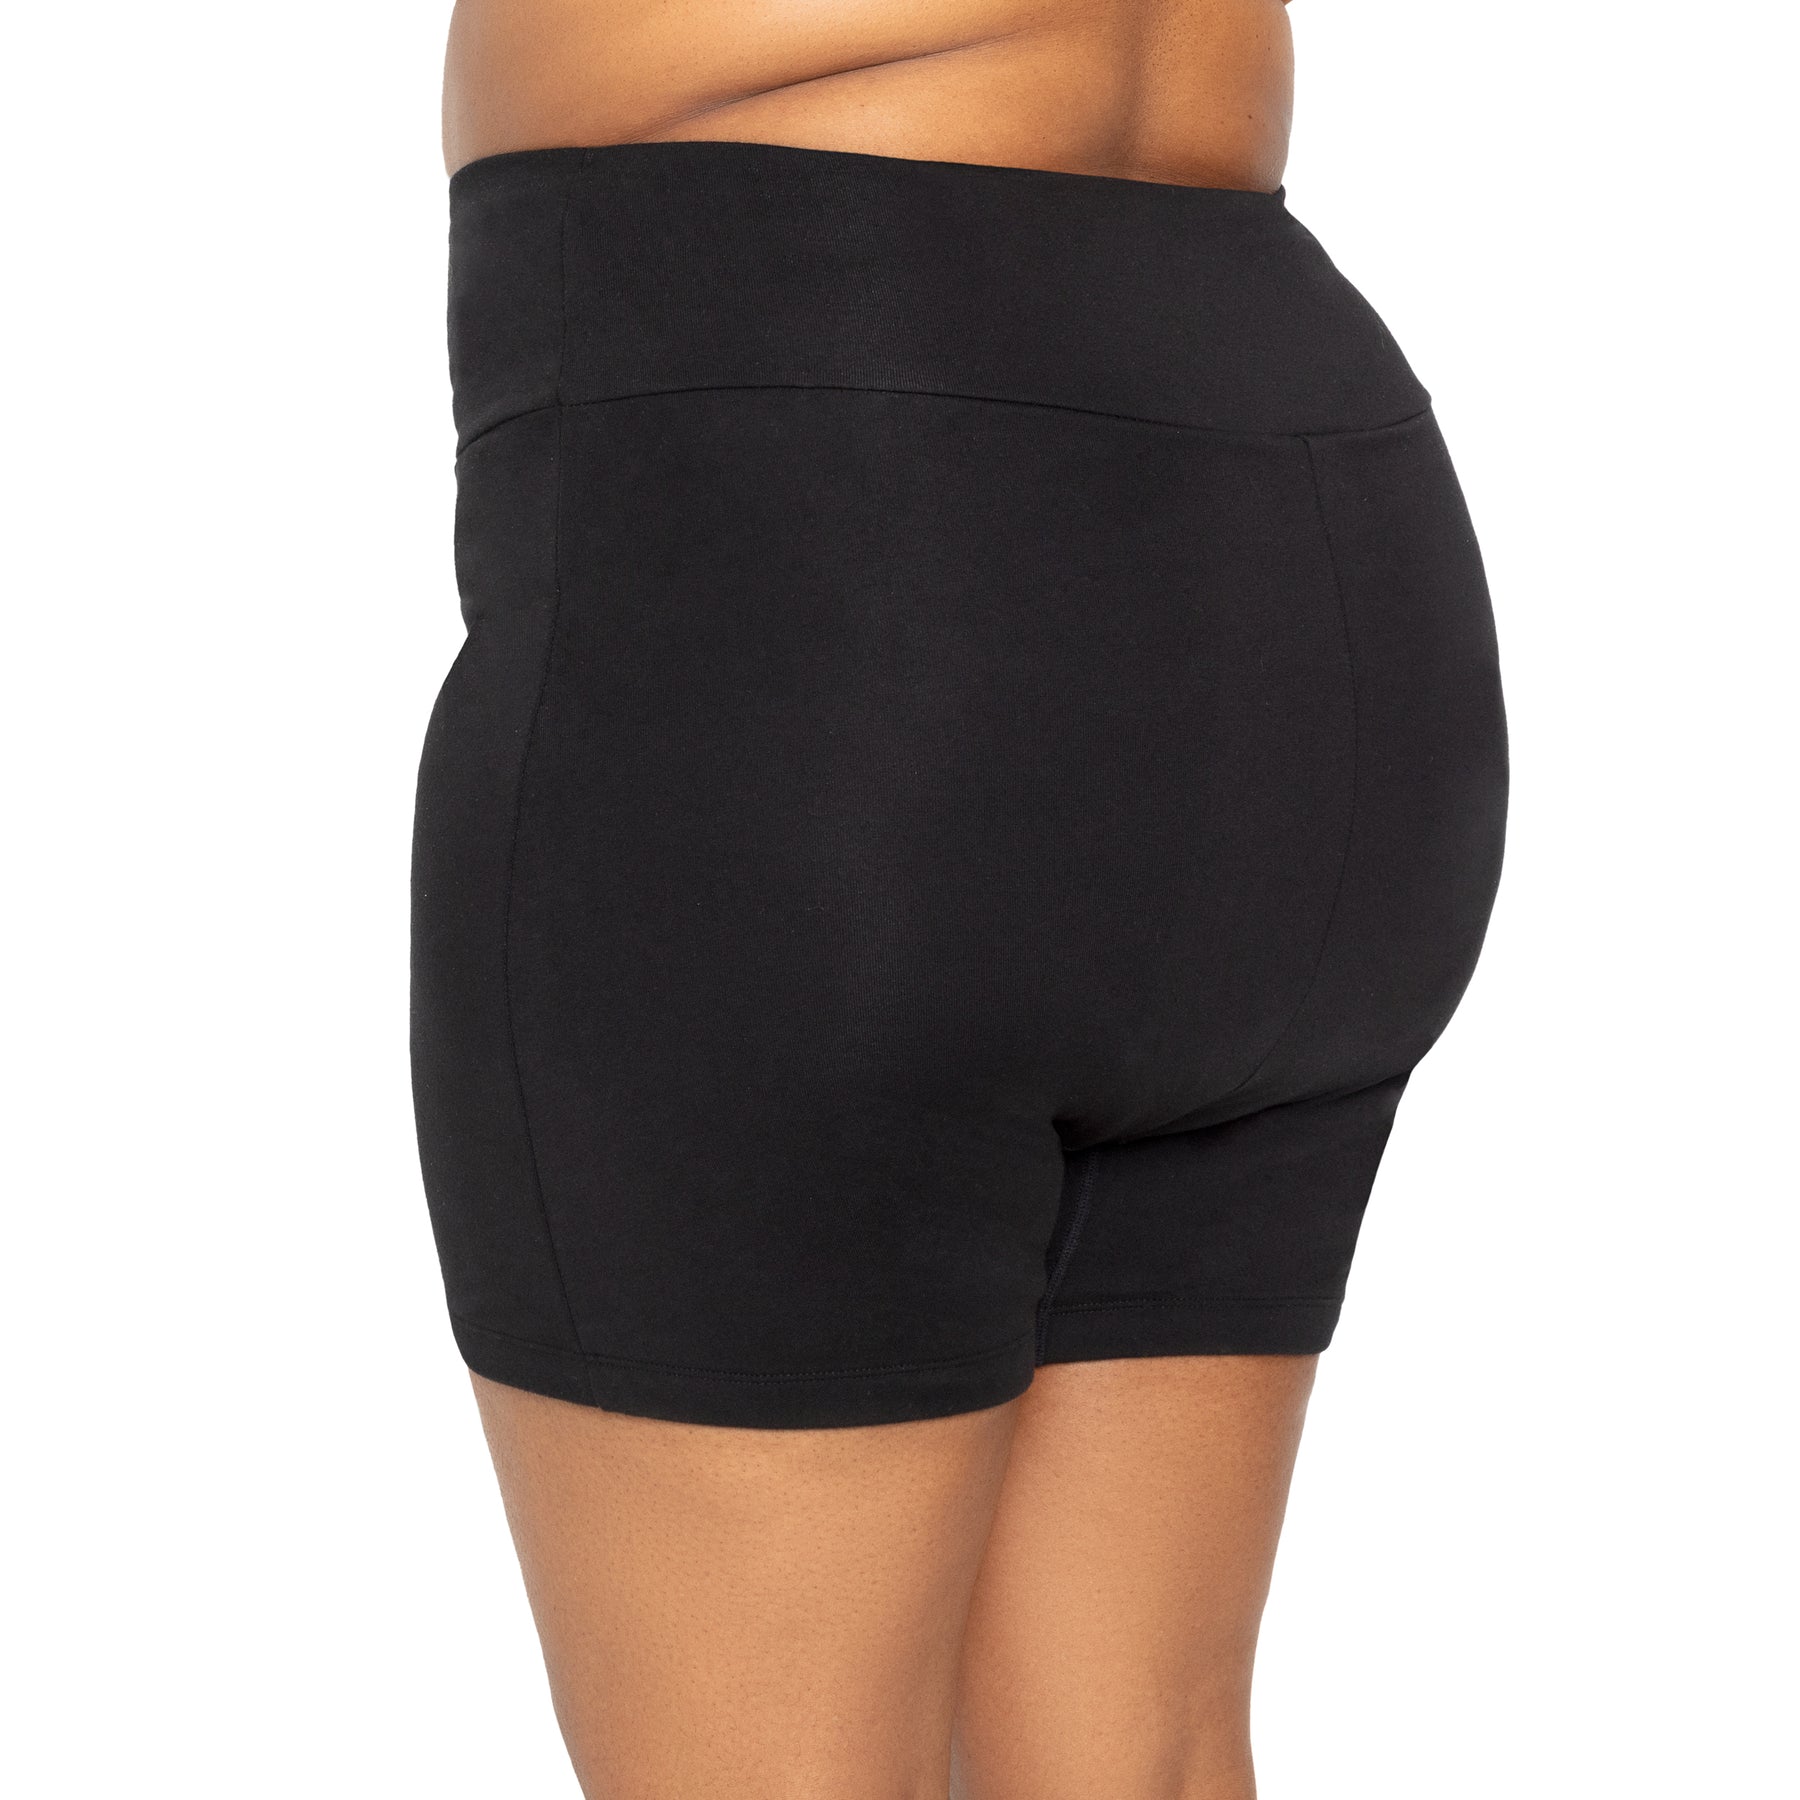 Cora Period Underwear | Sleep Short High Waist Style, Powerfully Absorbent,  Leak Proof Menstrual Panties